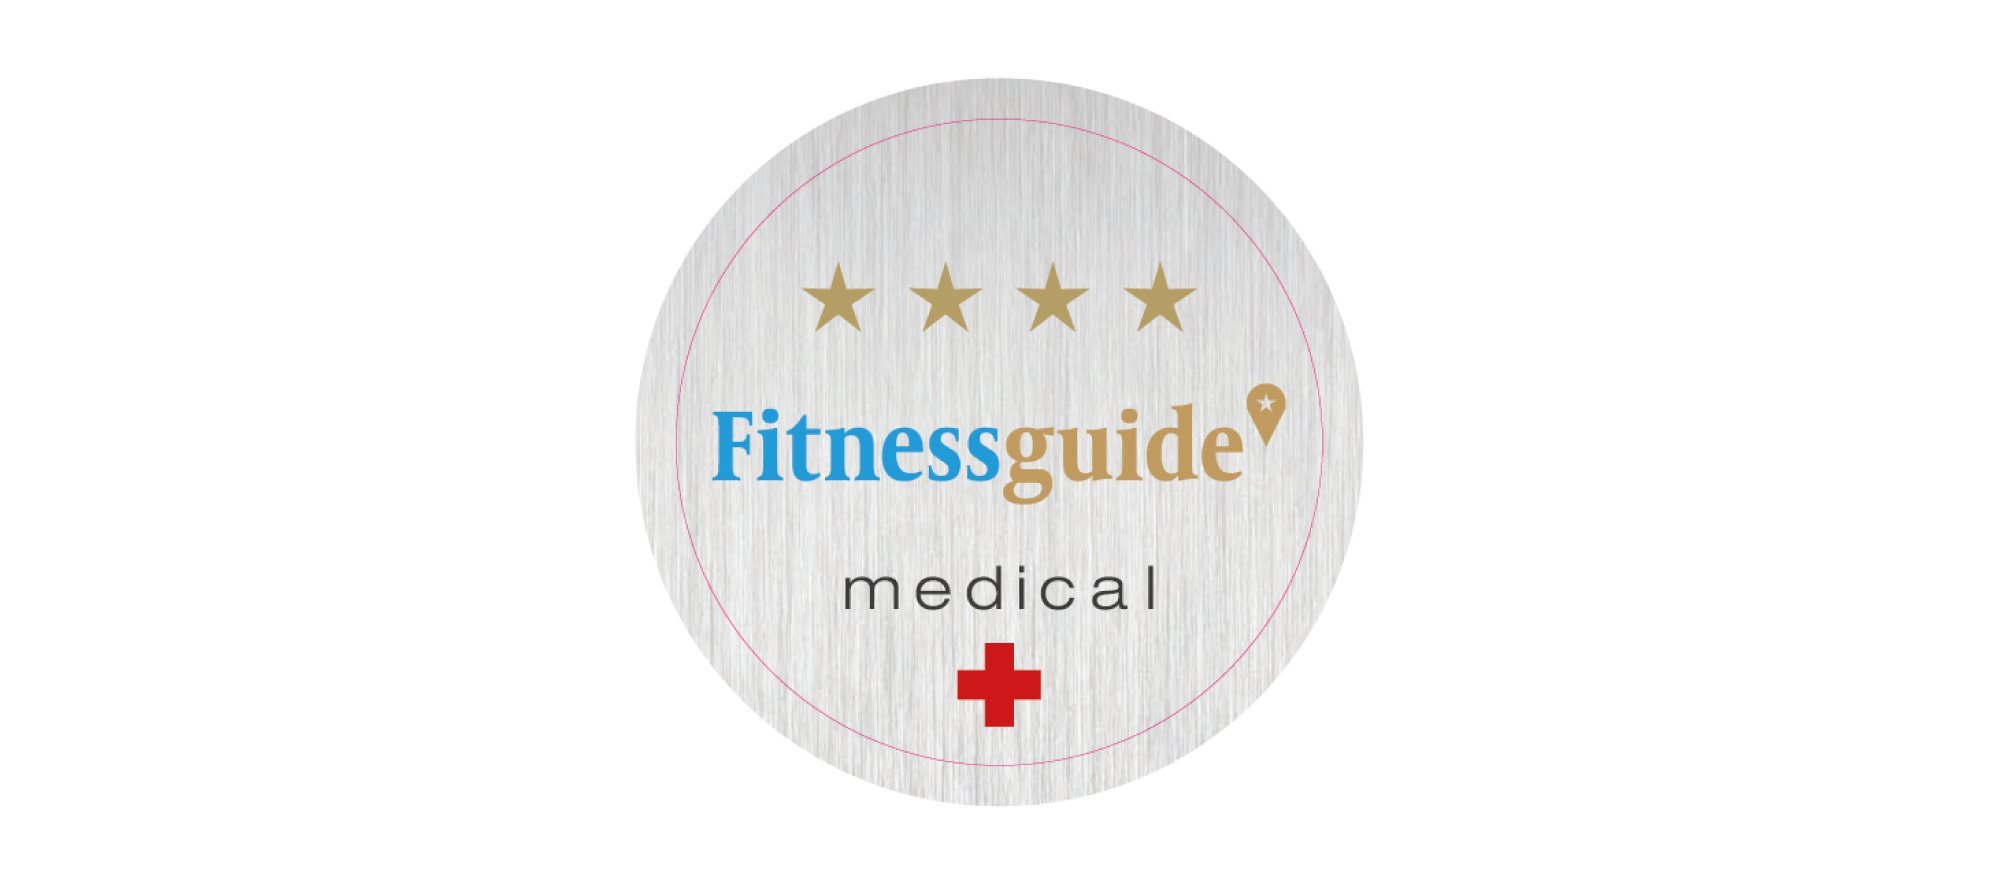 Fitness Guide Medical 4 Sterne